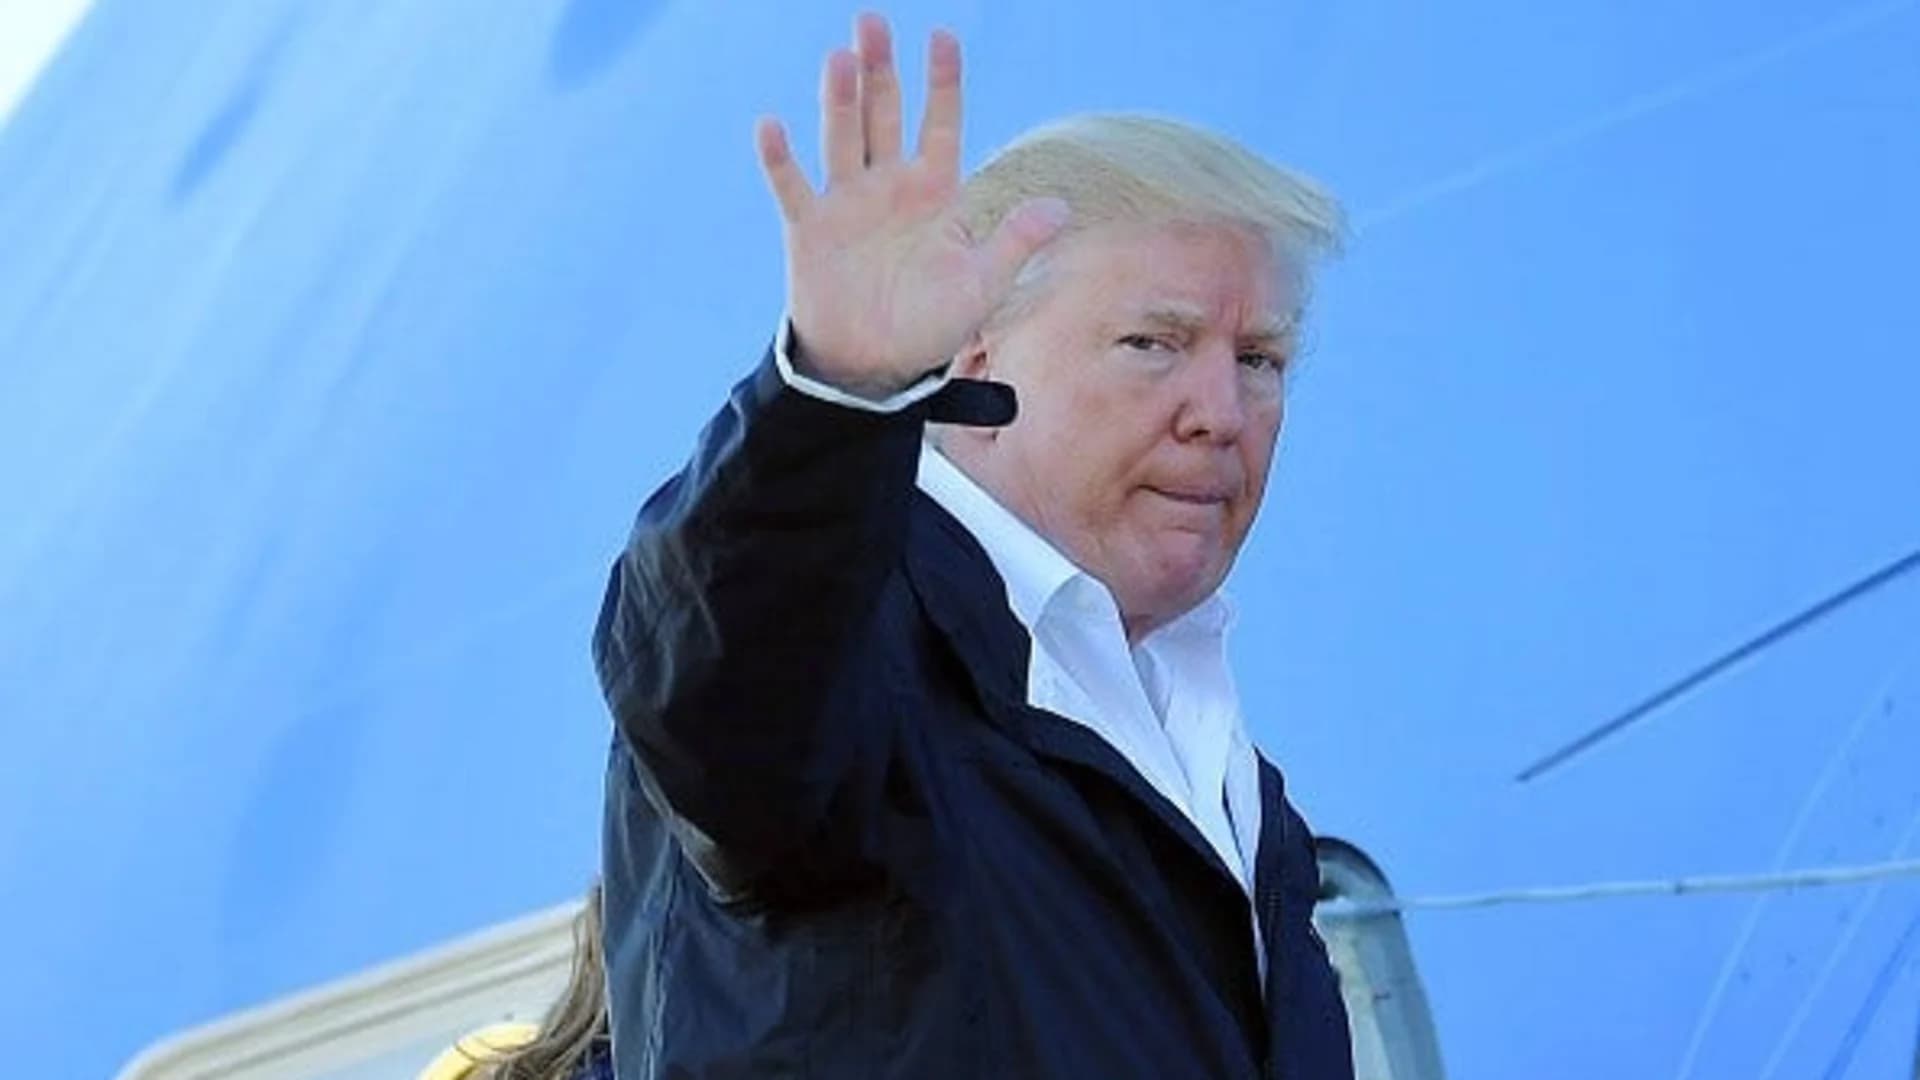 Trump heads to Puerto Rico to view hurricane damage